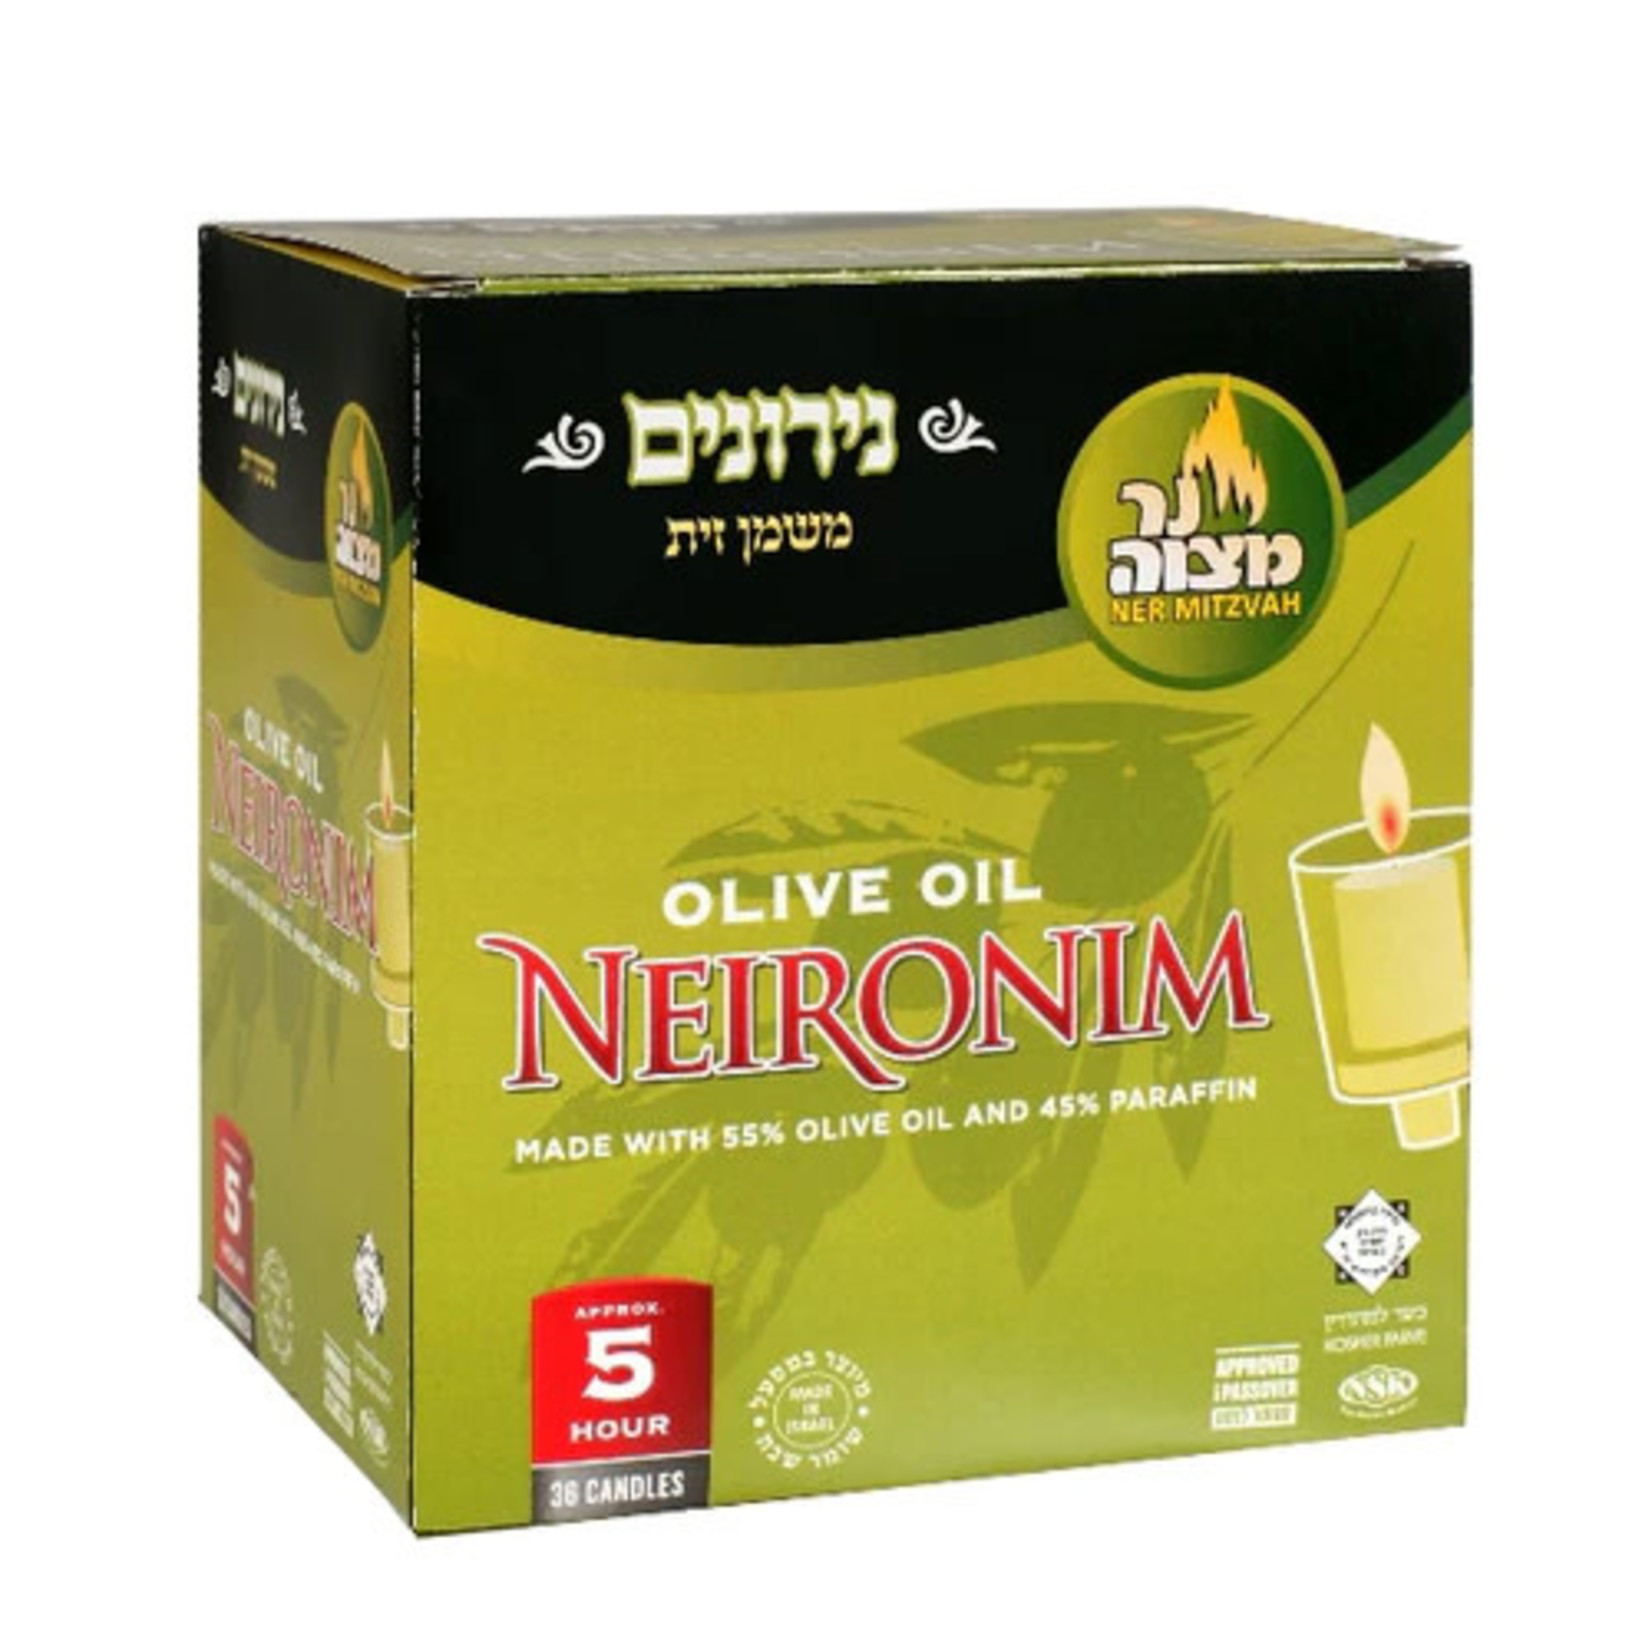 Olive Oil Neronim, 36pcs